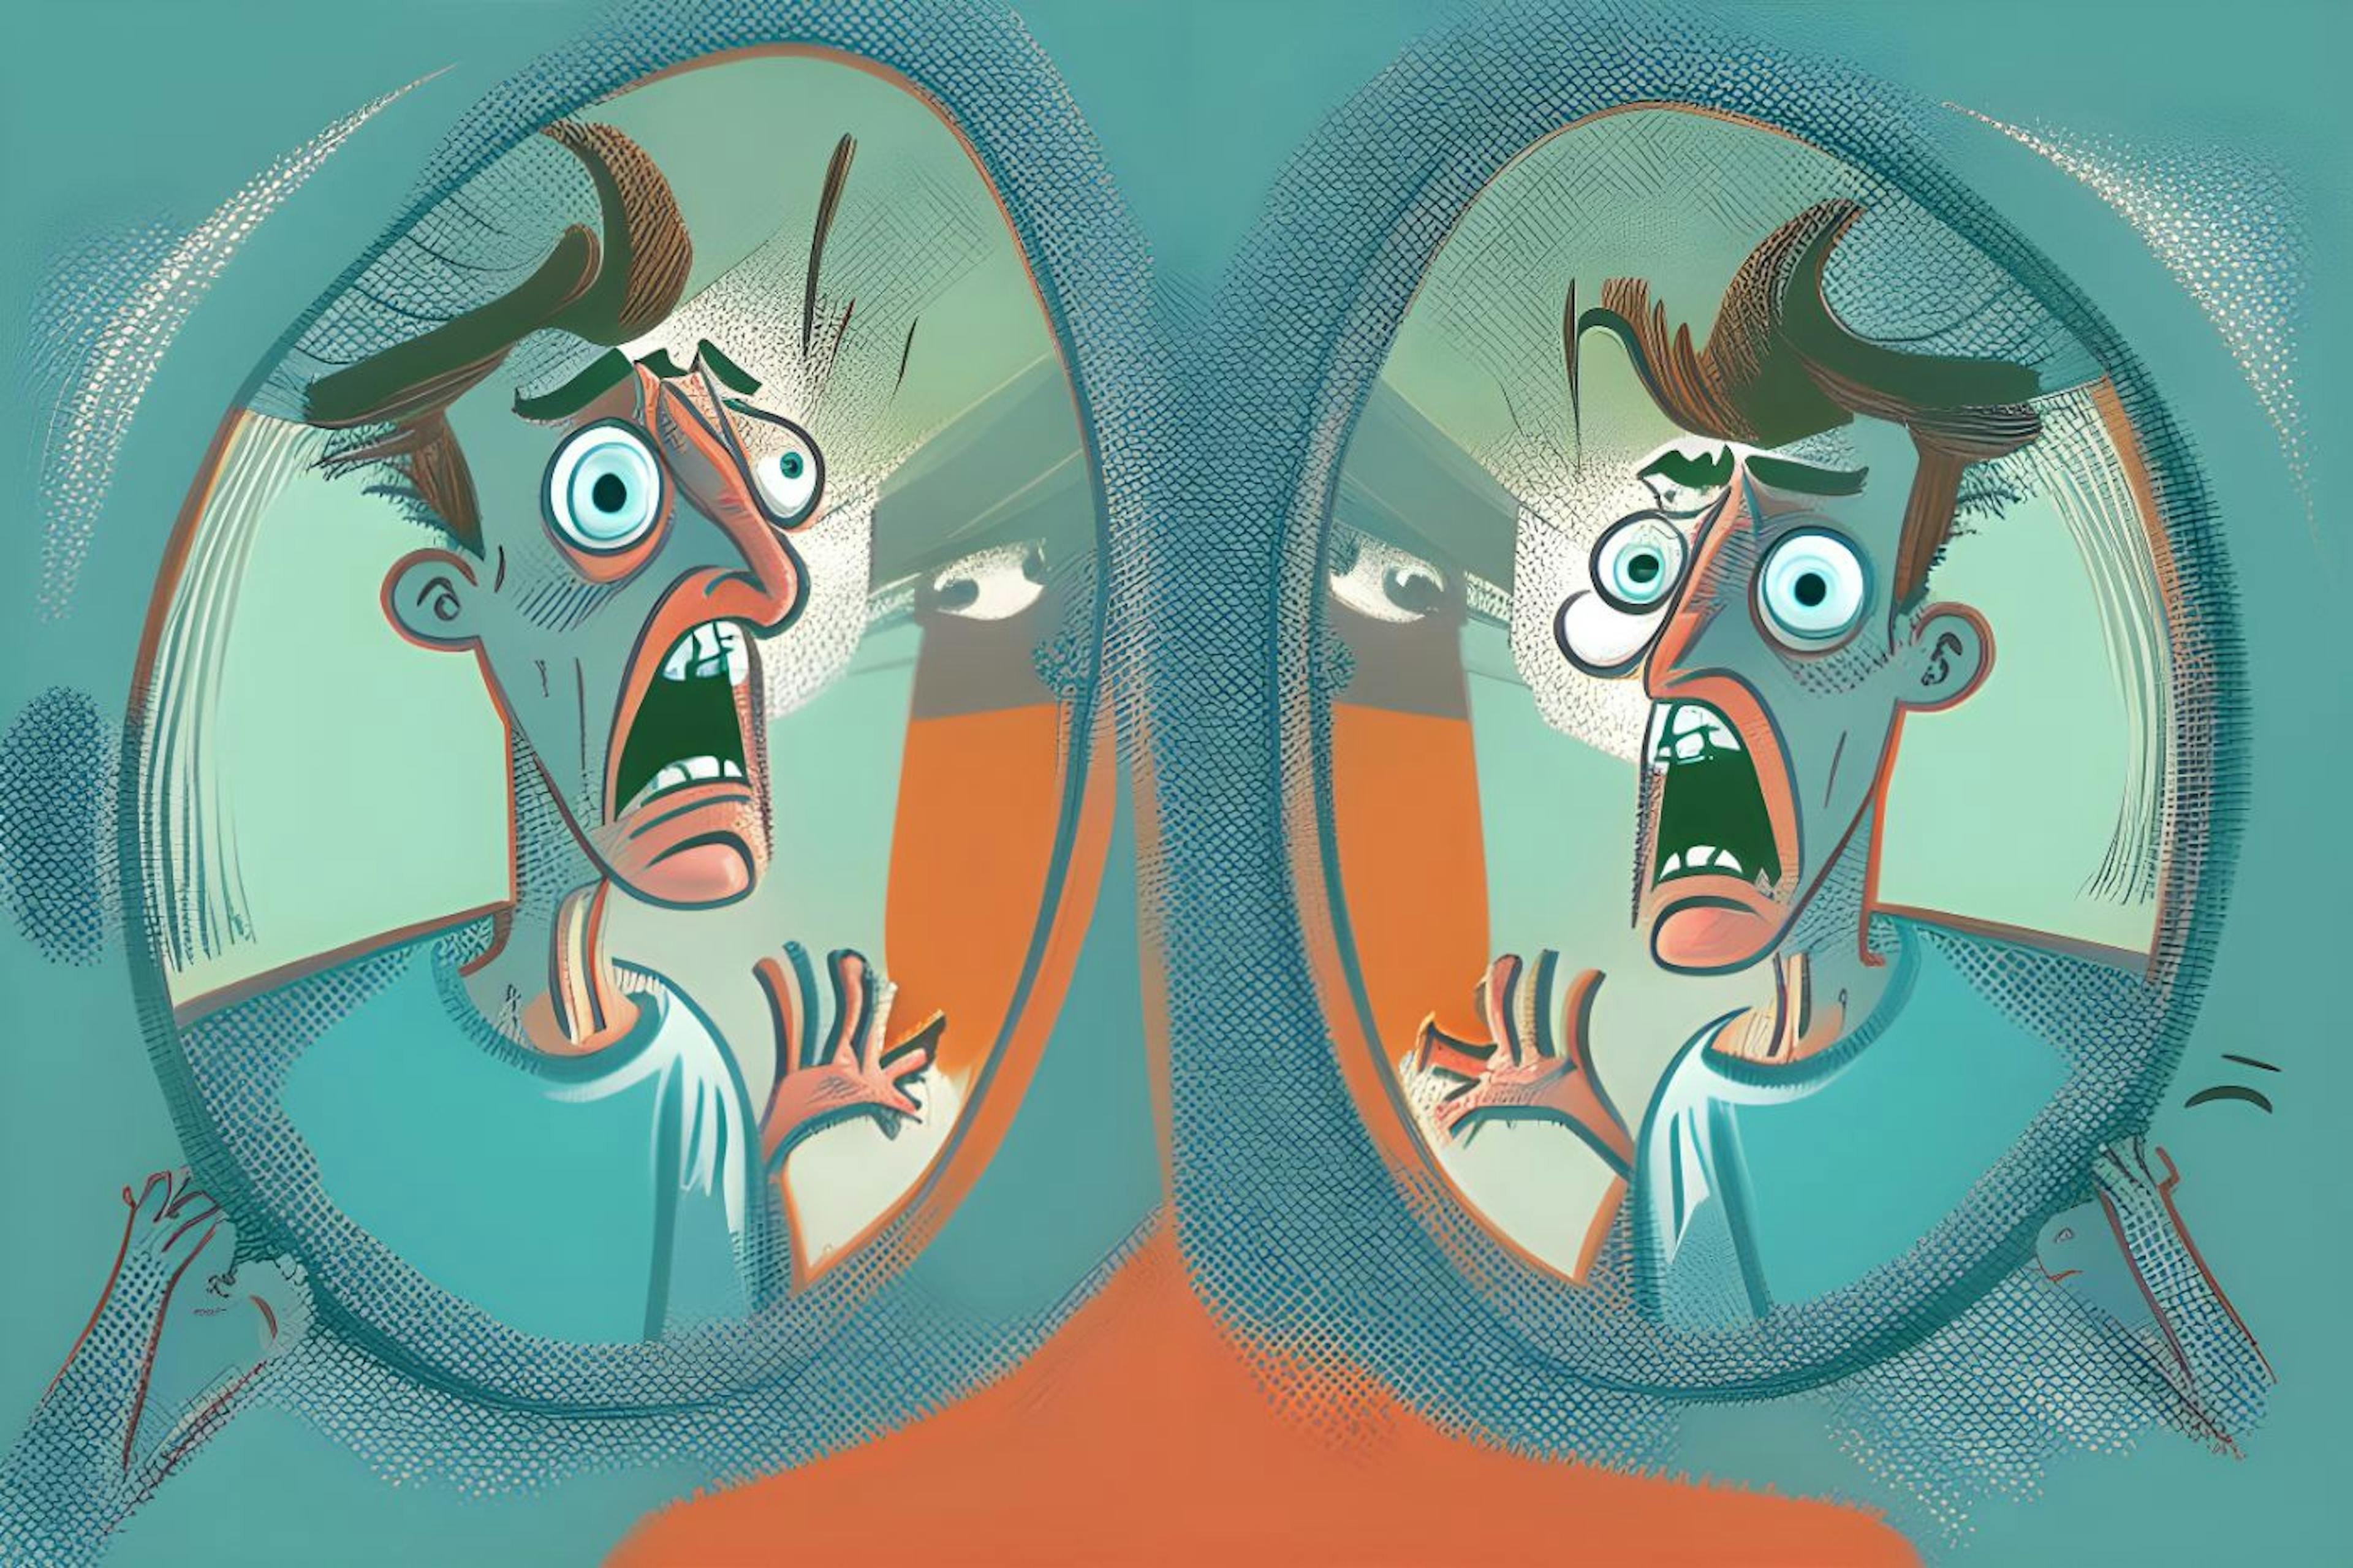 Cartoonish man looking into a mirror Image